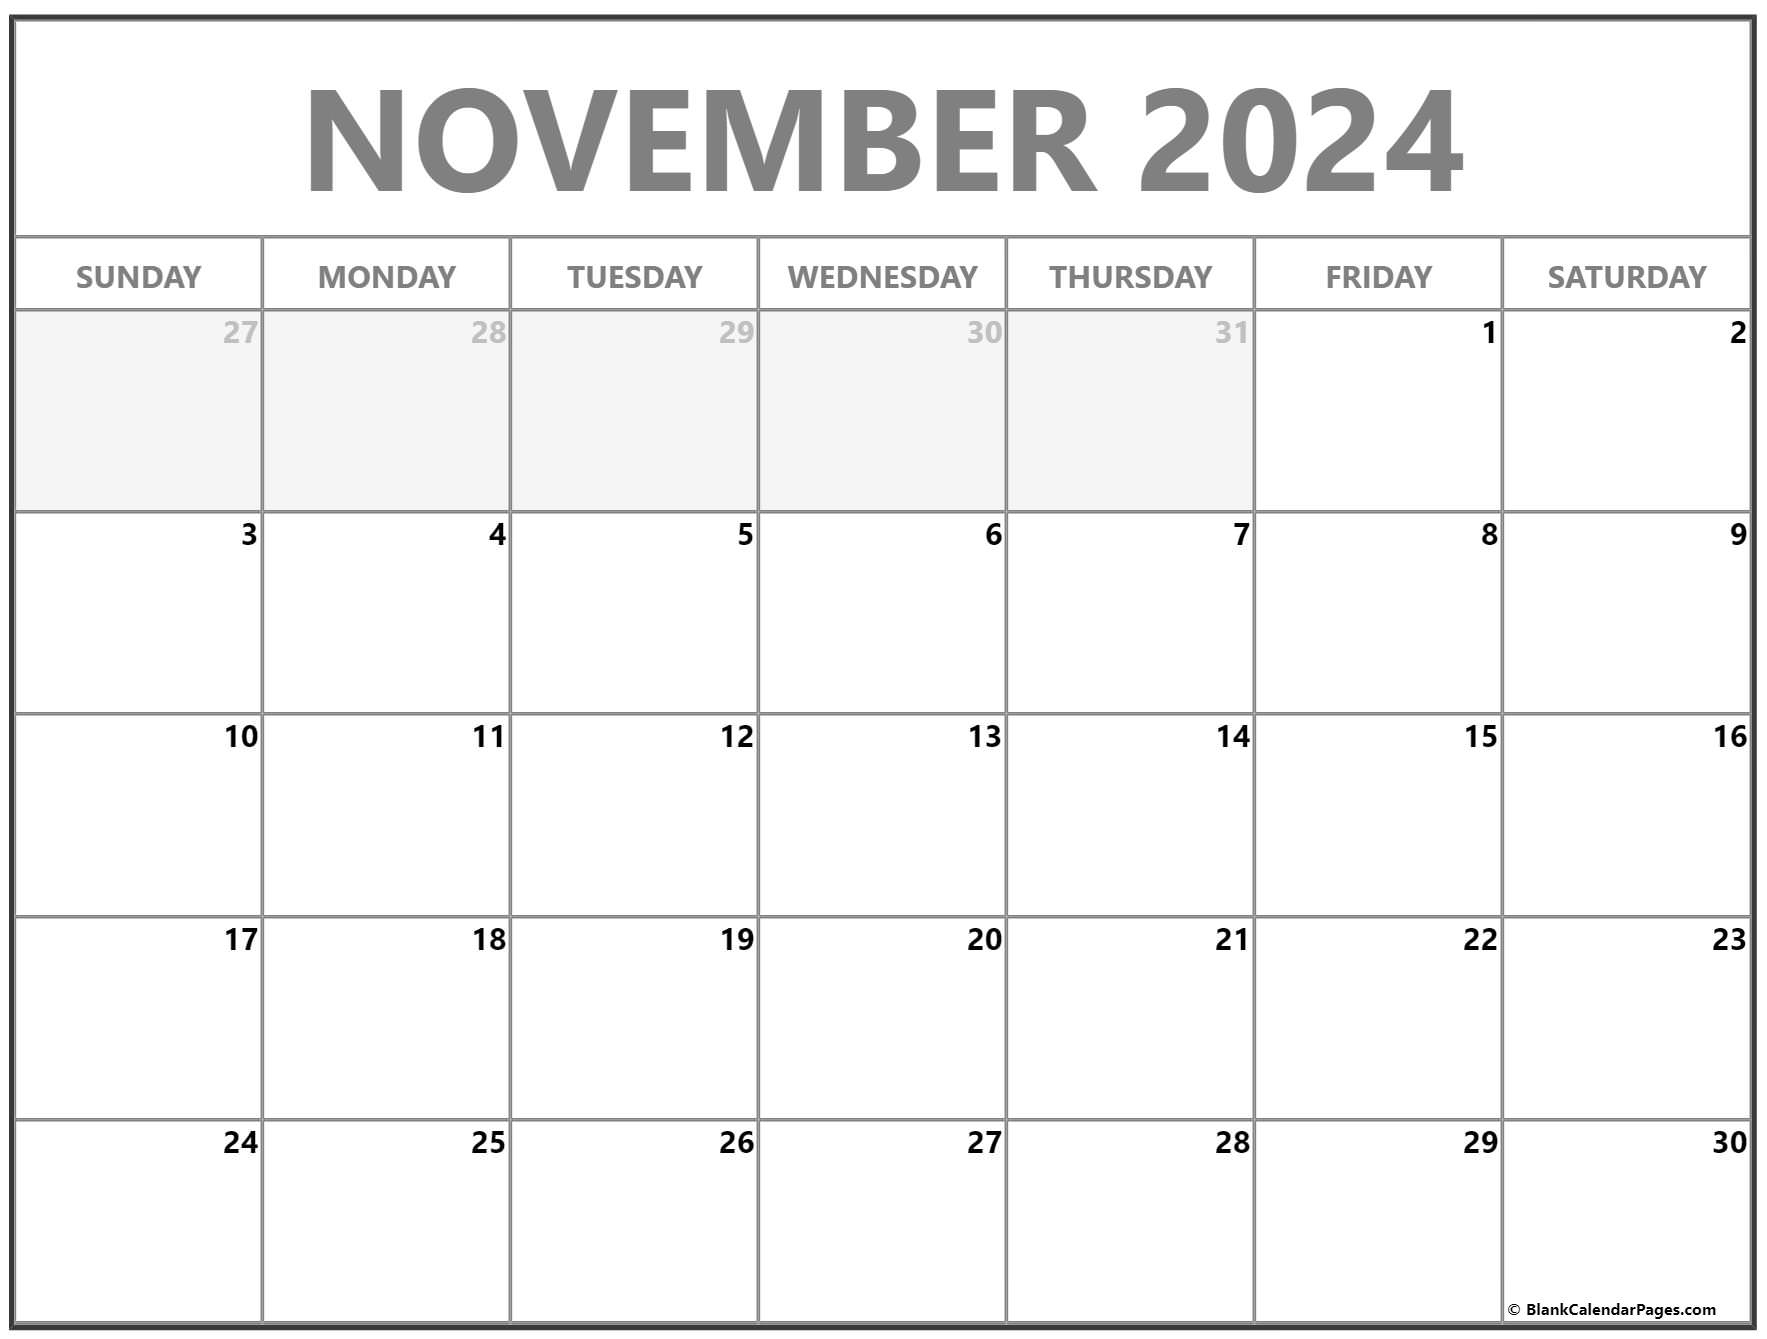 November 2024 Calendar | Free Printable Calendar pertaining to Free Printable Blank Calendar November 2024